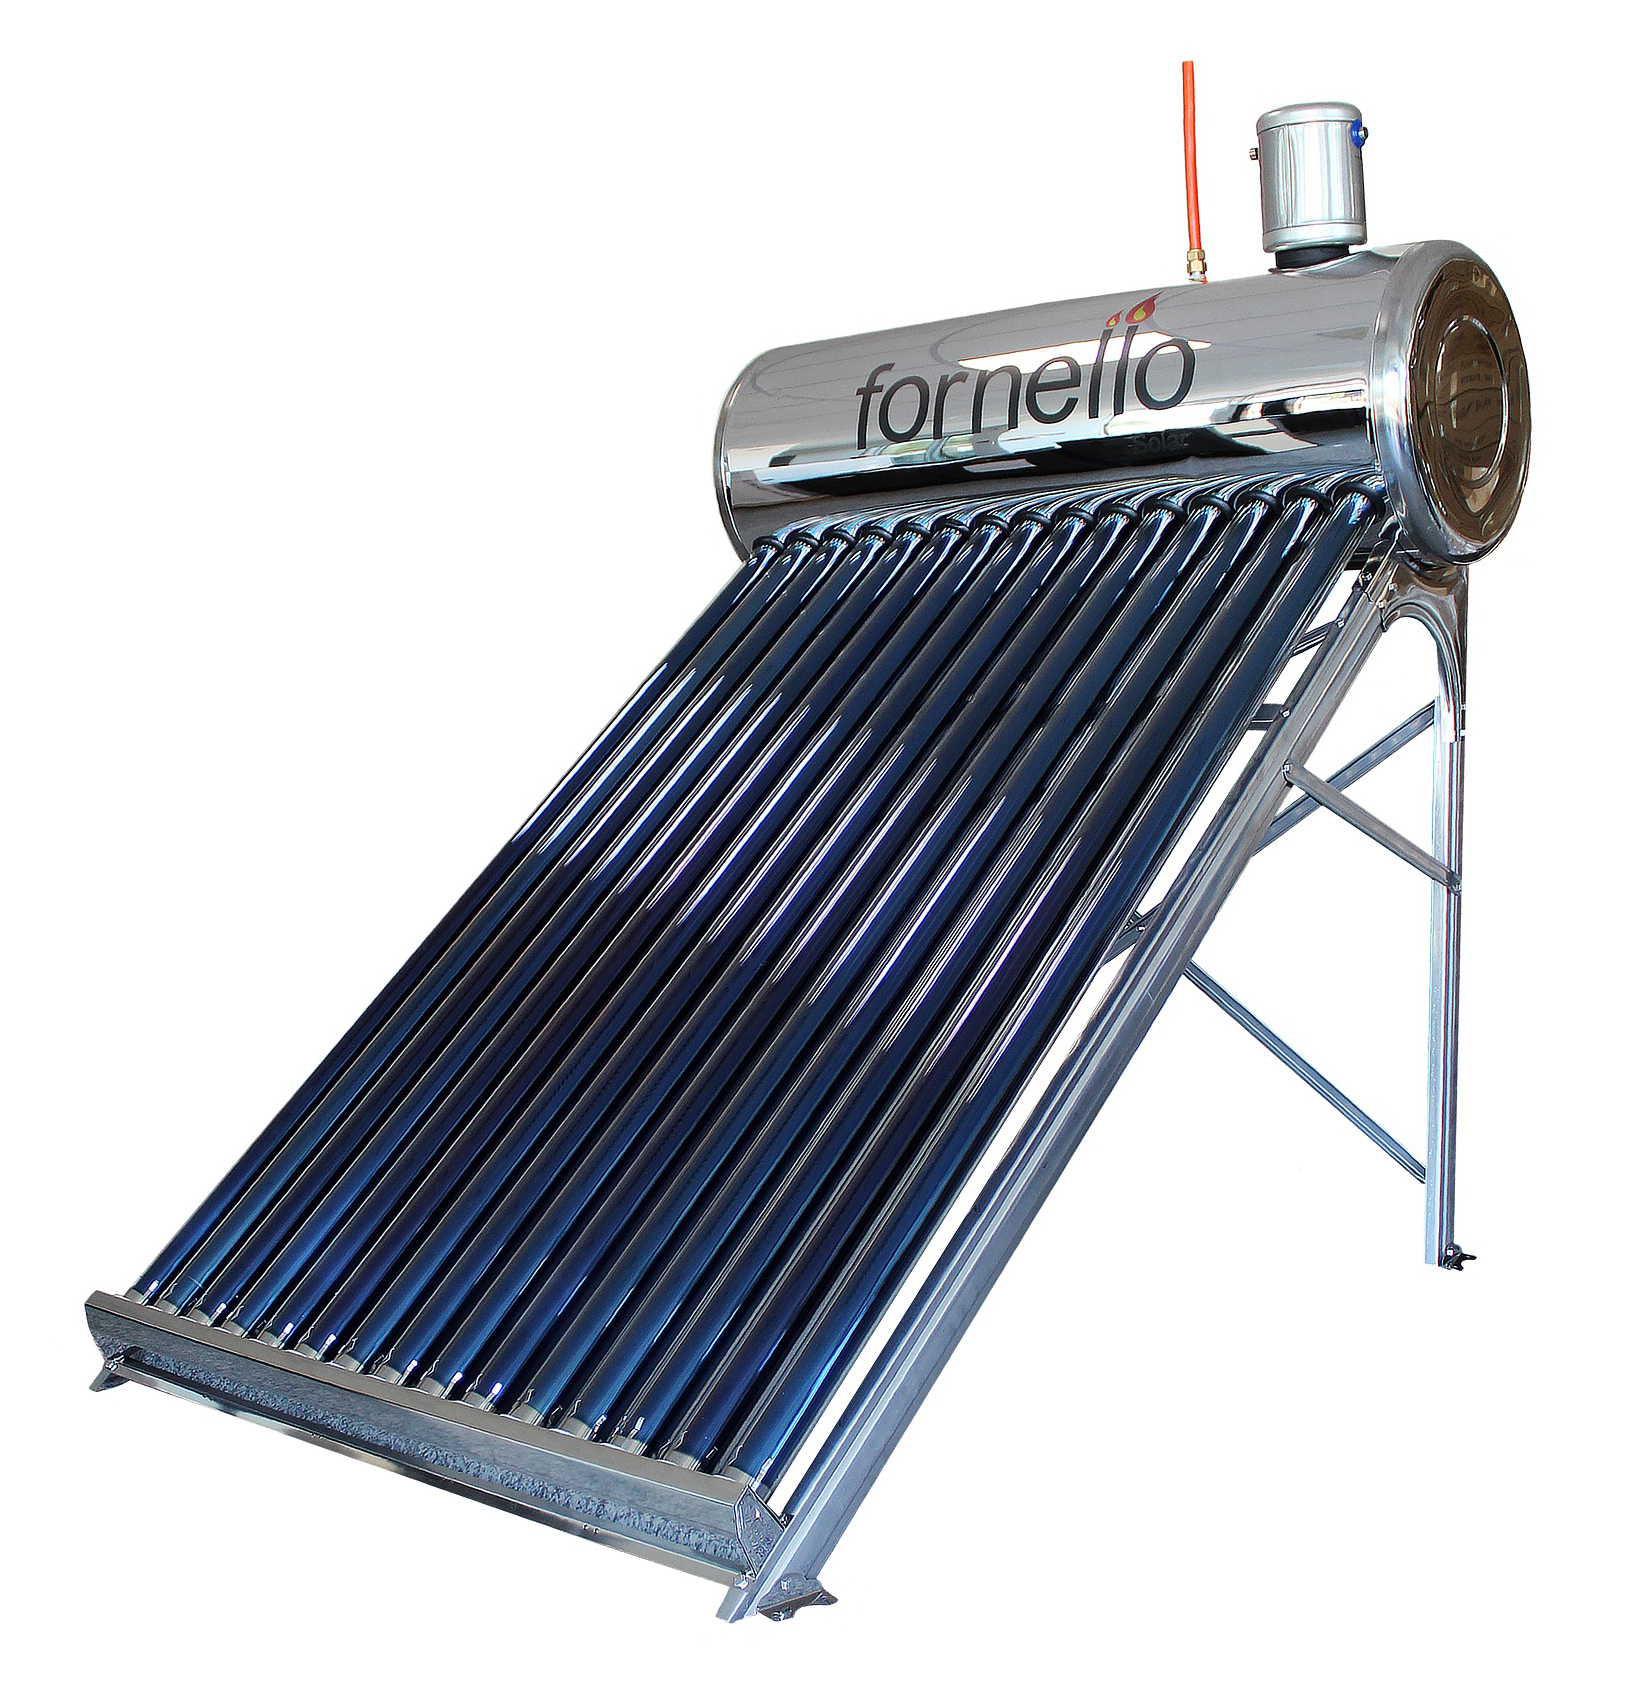 Panou solar nepresurizat Fornello pentru producere apa calda, cu rezervor inox 165 litri si 20 tuburi vidate Fornello